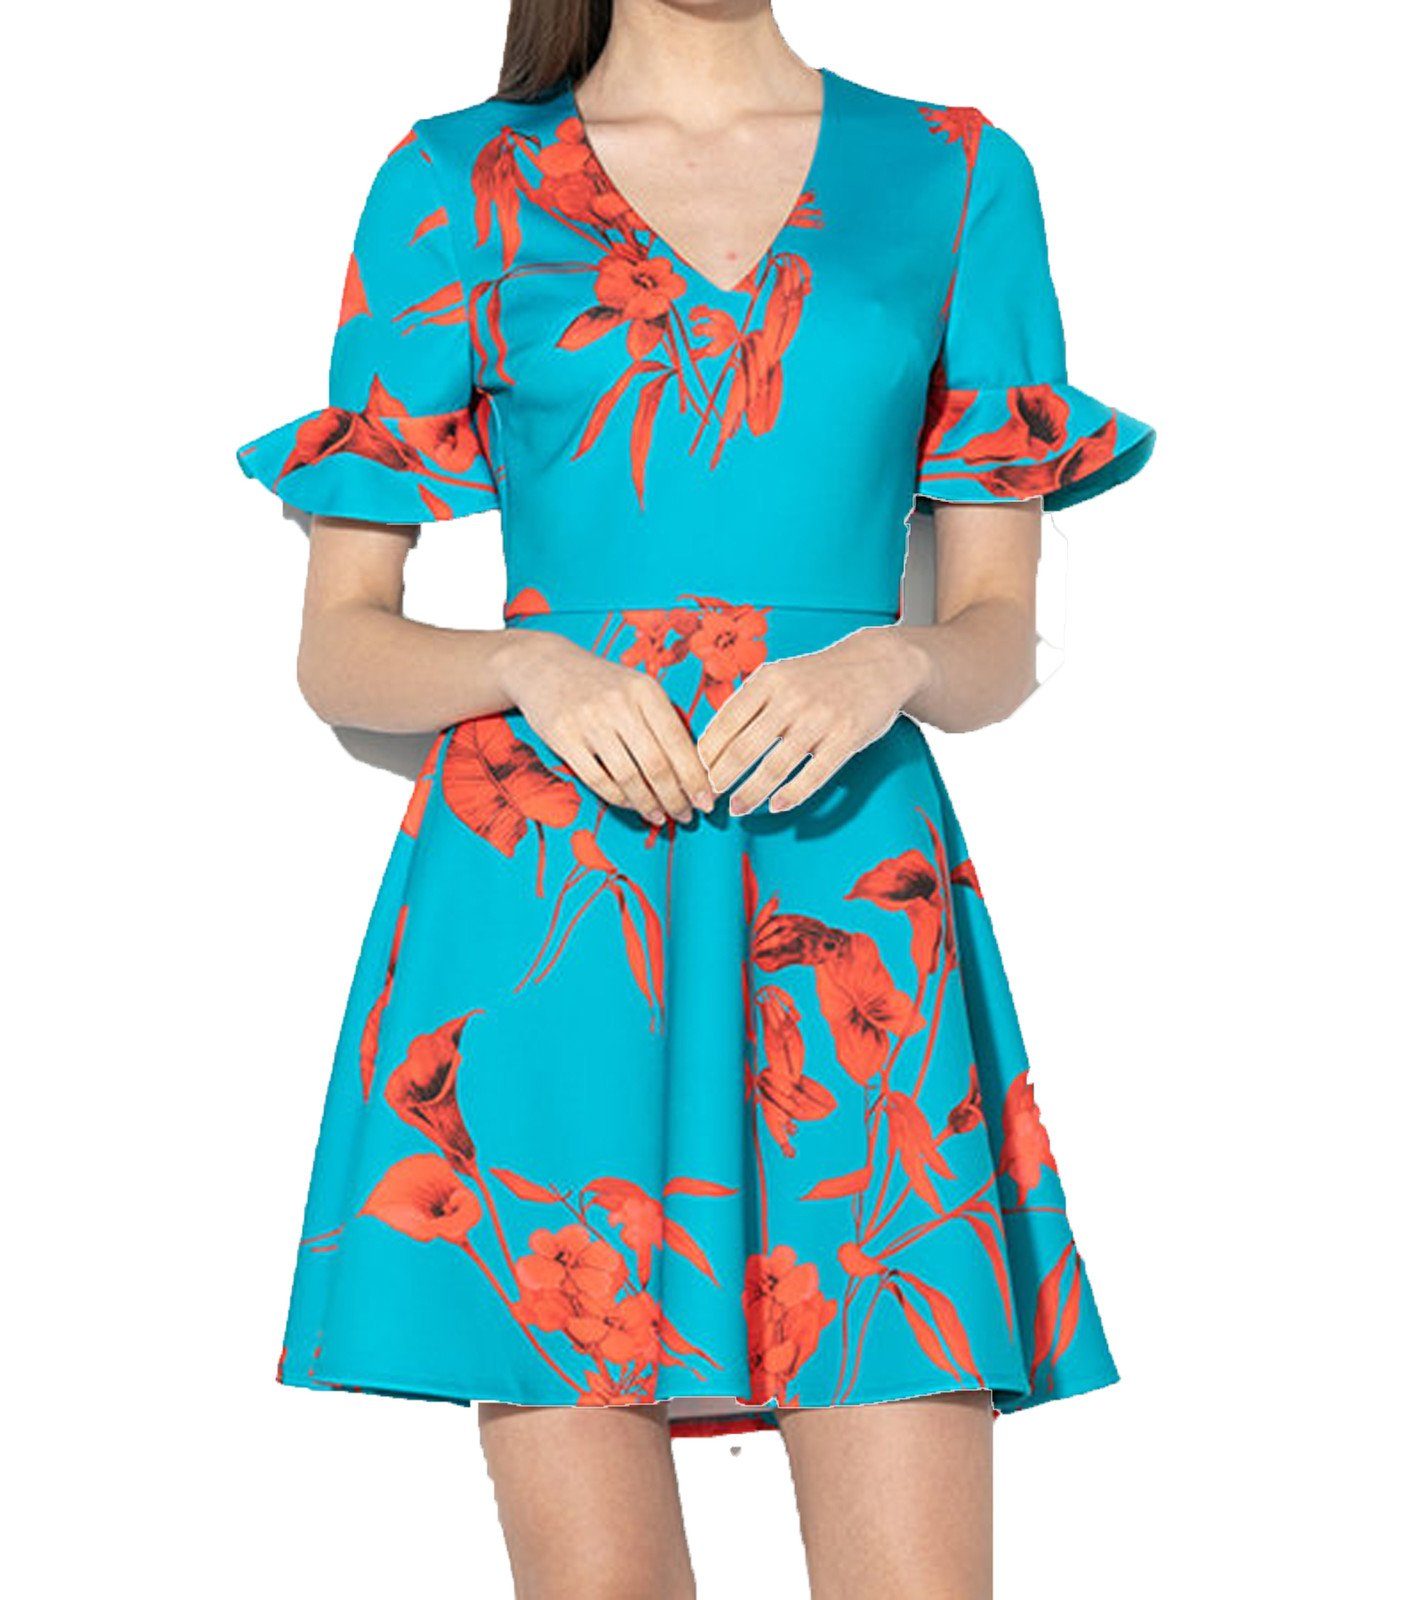 Damen Kleider Ted Baker Sommerkleid TED BAKER LONDON Sommer-Kleid feminines Damen Ausgeh-Kleid mit Blütendruck Party-Kleid Türki